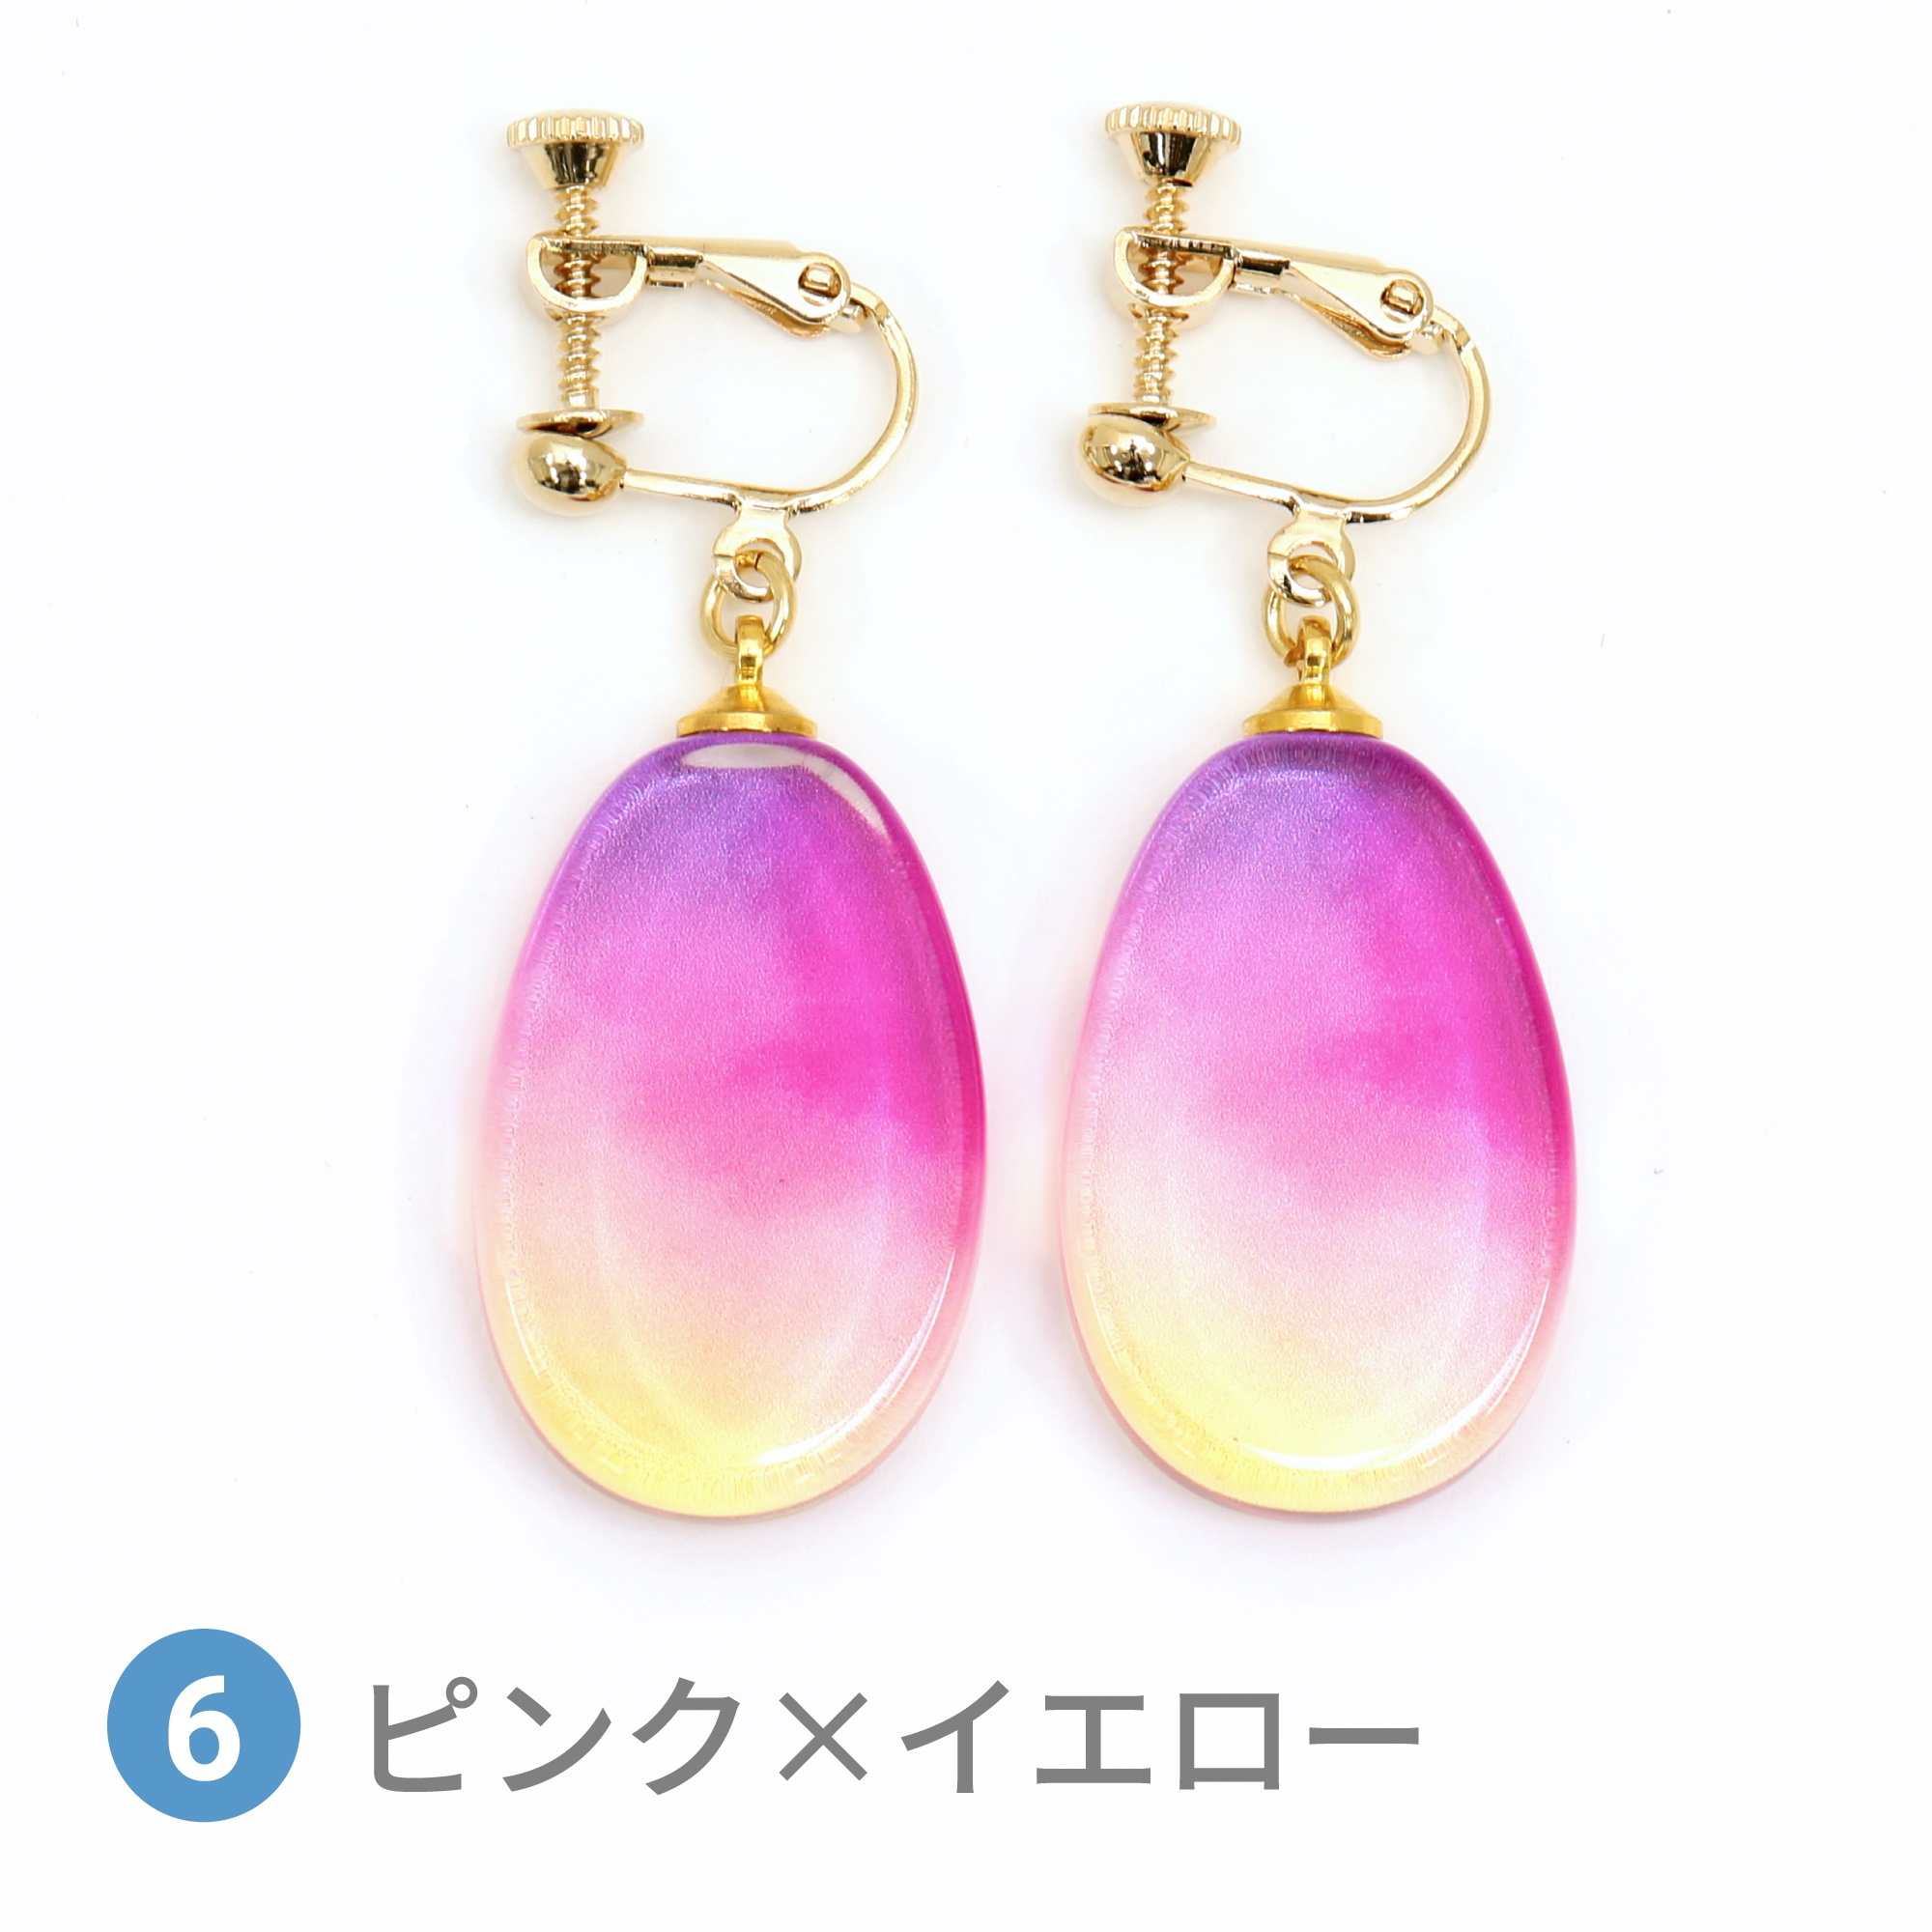 Glass accessories Earring AURORA pink&yellow drop shape